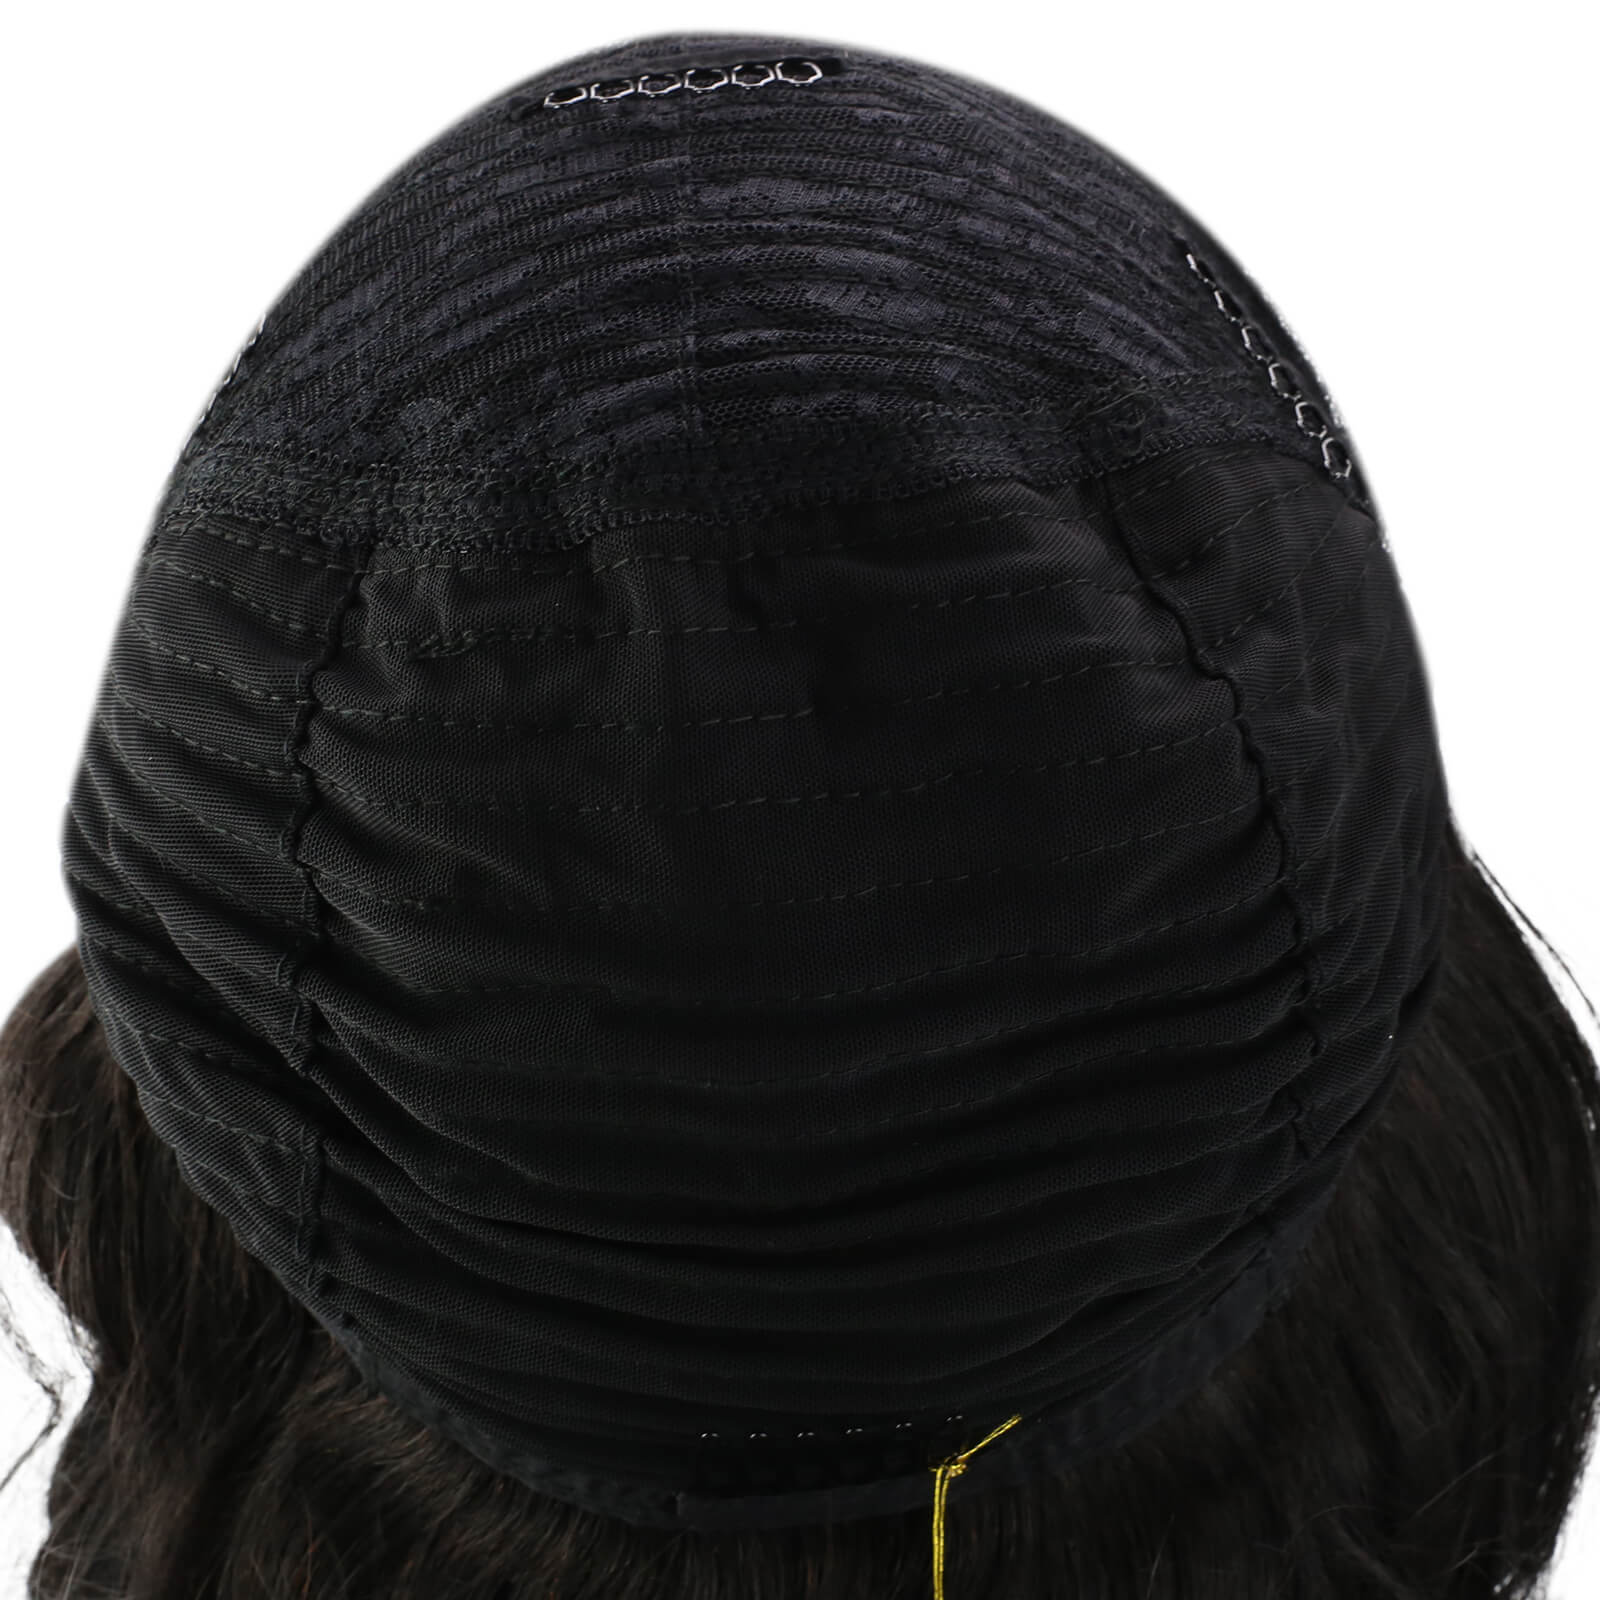 Fshine Natural Wave Headband Wigs for Women #1B